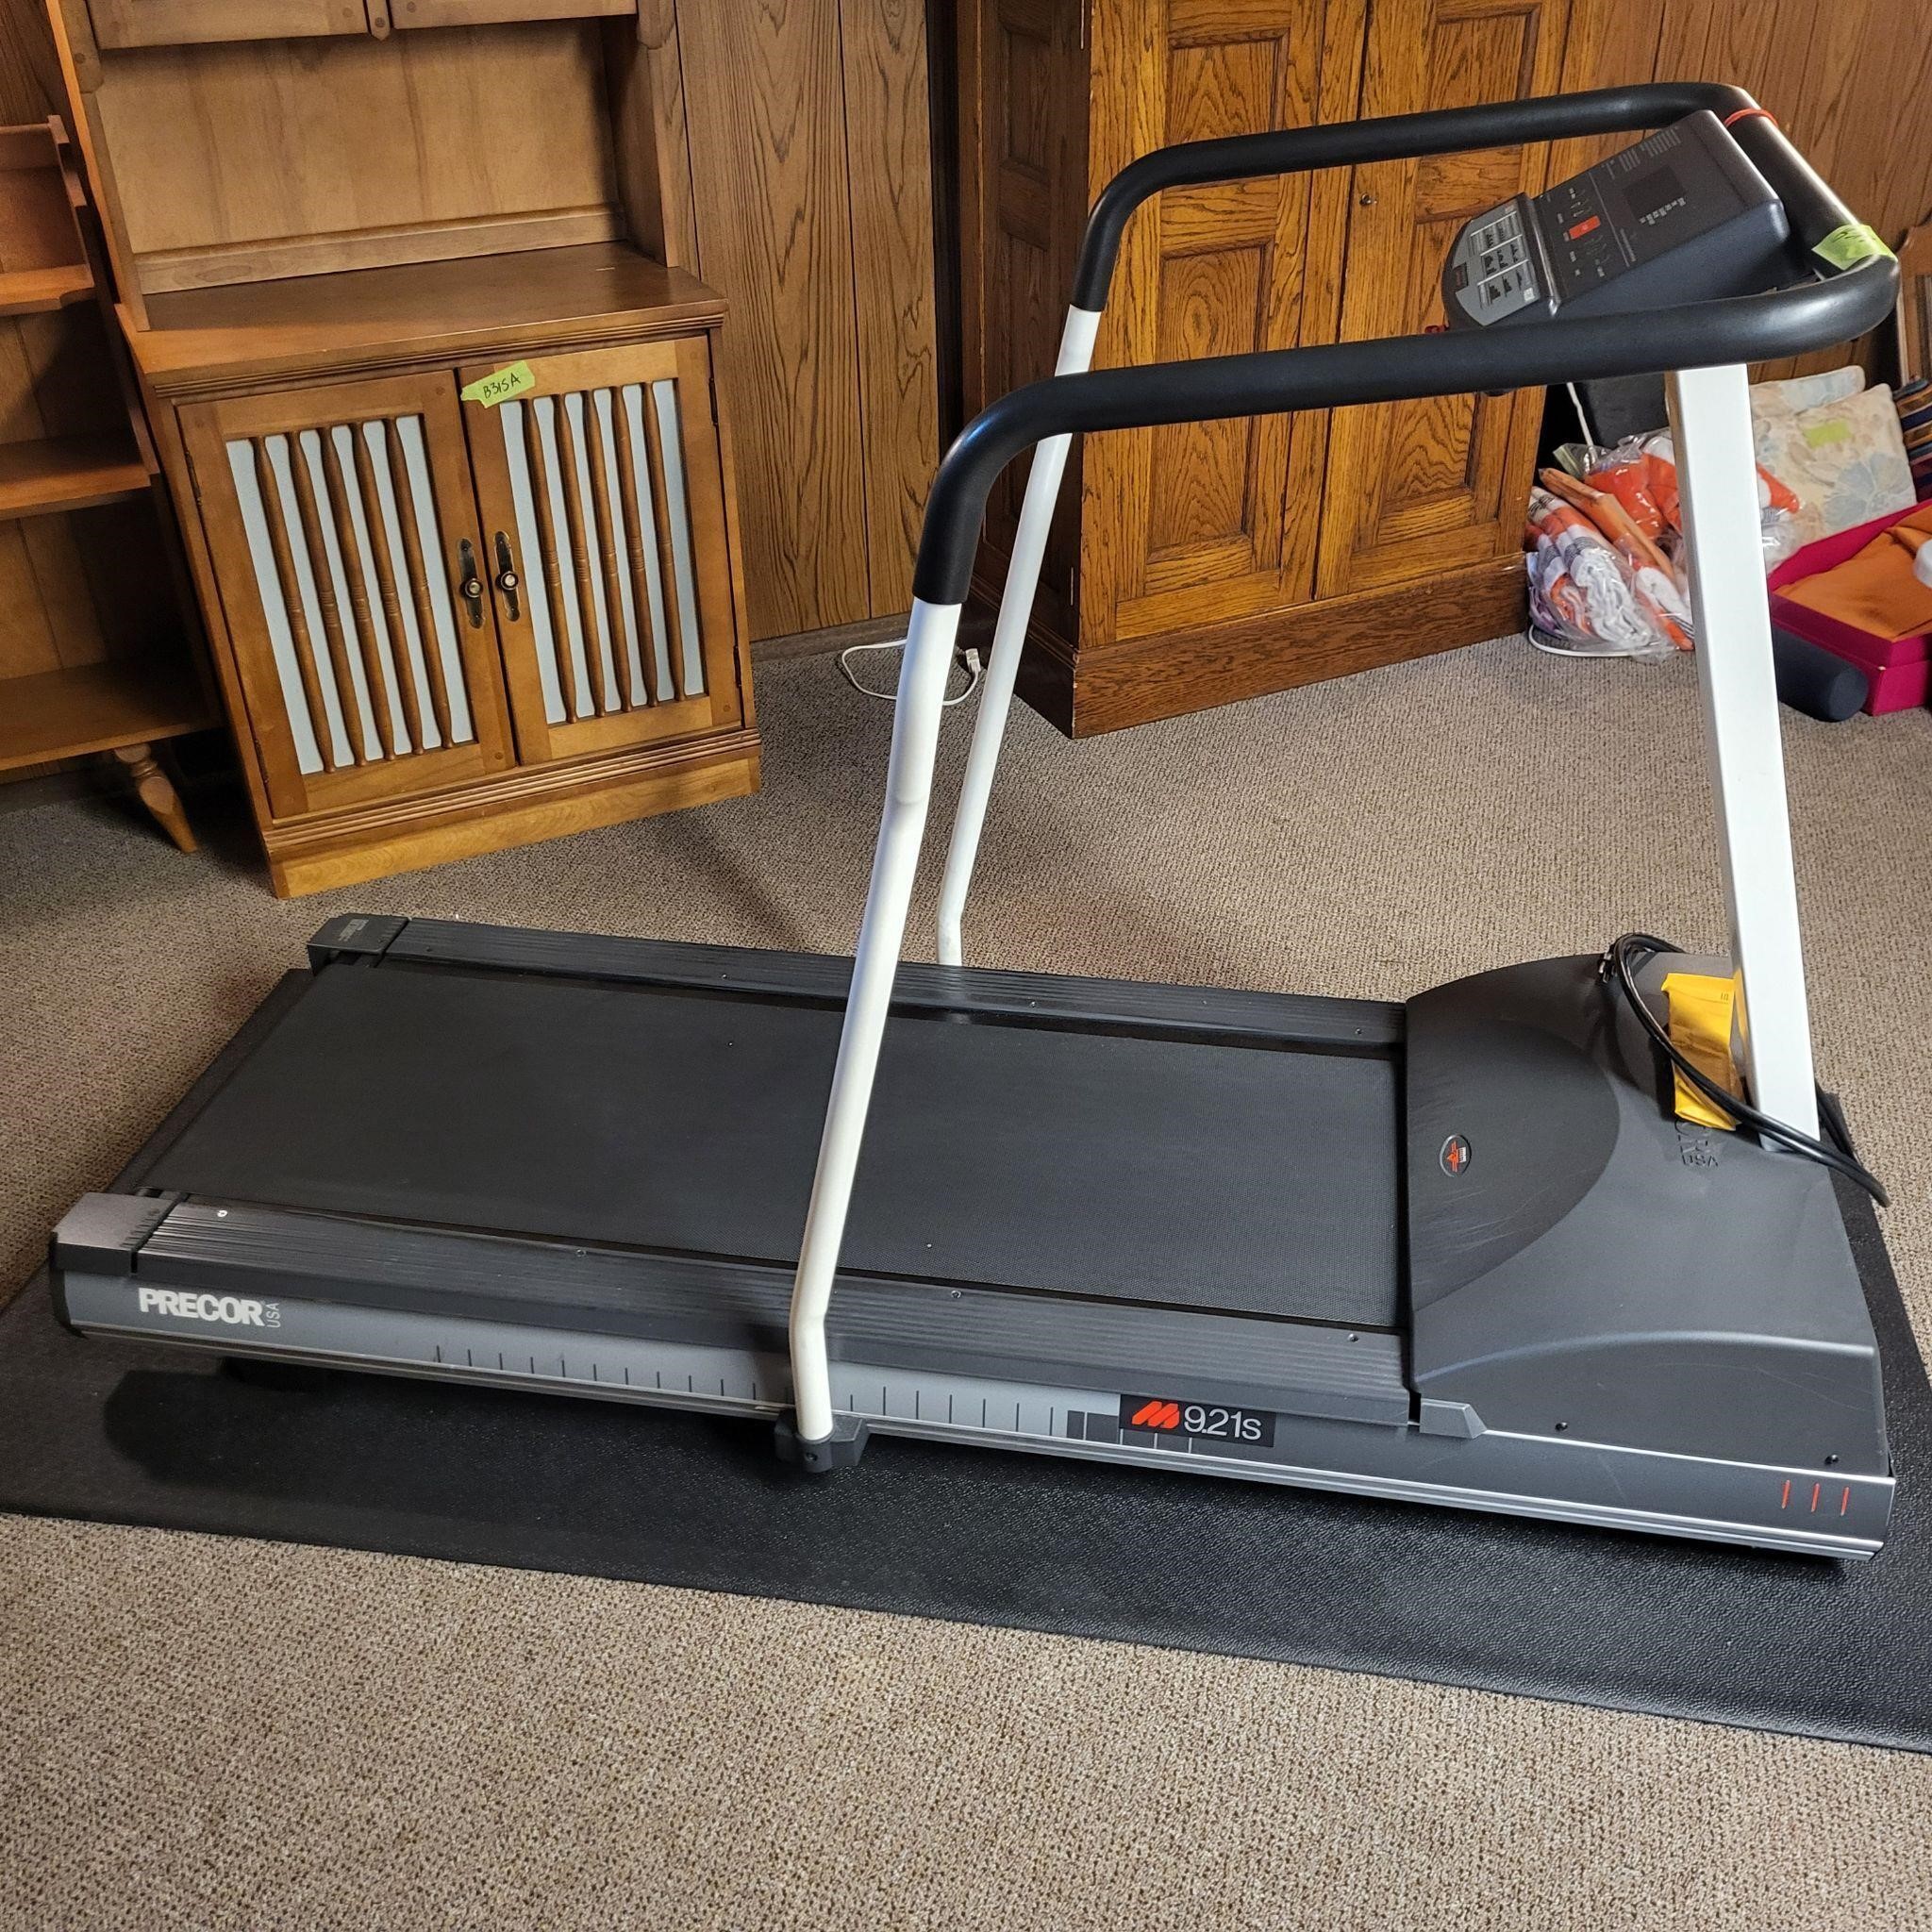 B319 Precor Treadmill and mat